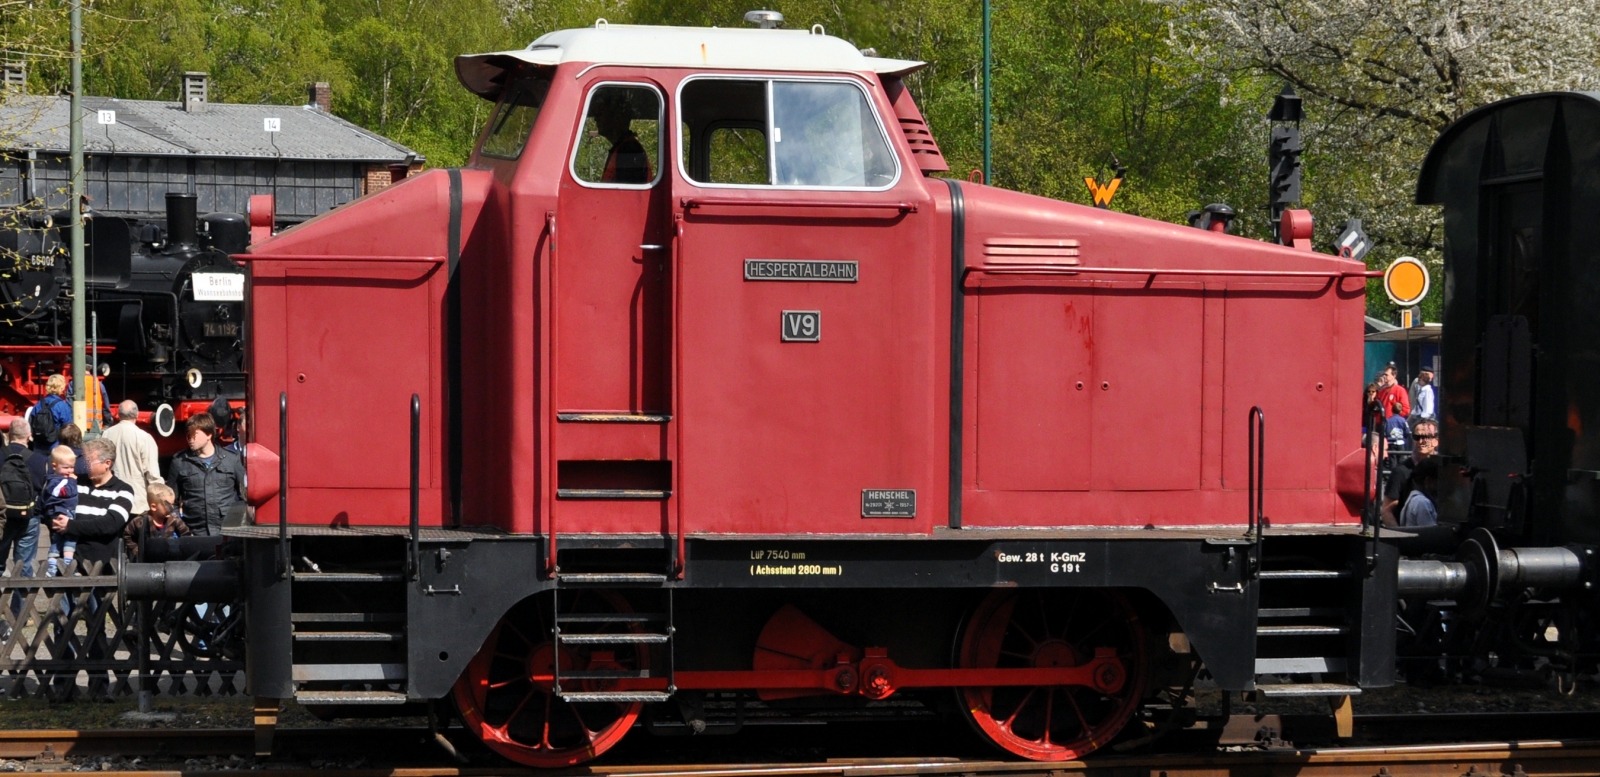 DH 240 of the Hespertalbahn in the Bochum-Dahlhausen Railway Museum